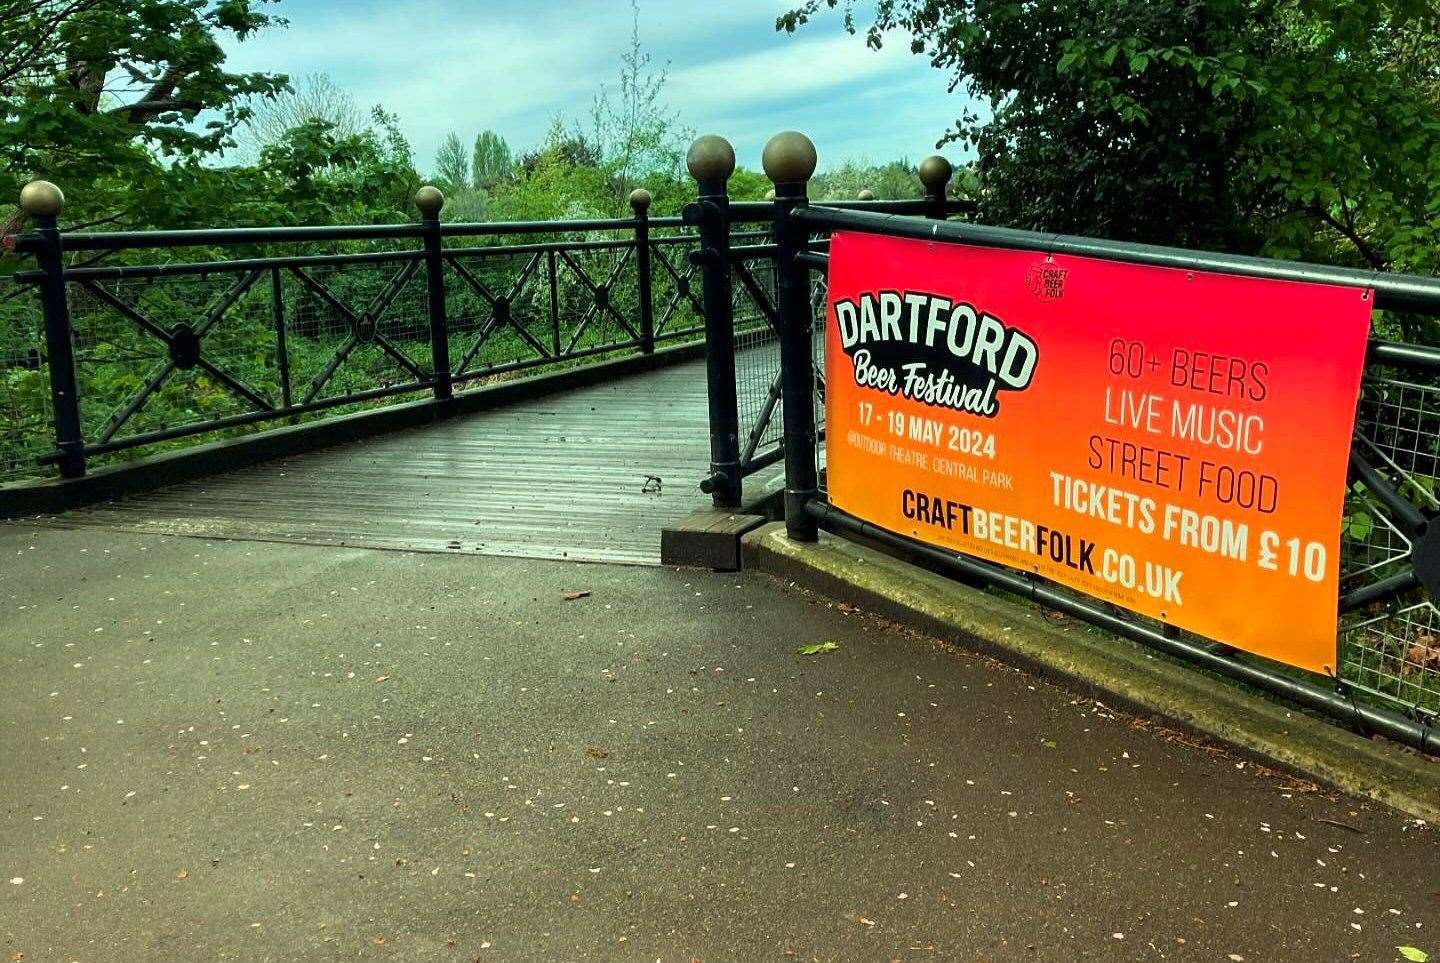 Craft Beer Folk’s Dartford Beer Festival is back at Central Park this May. Picture: Facebook / Craft Beer Folk